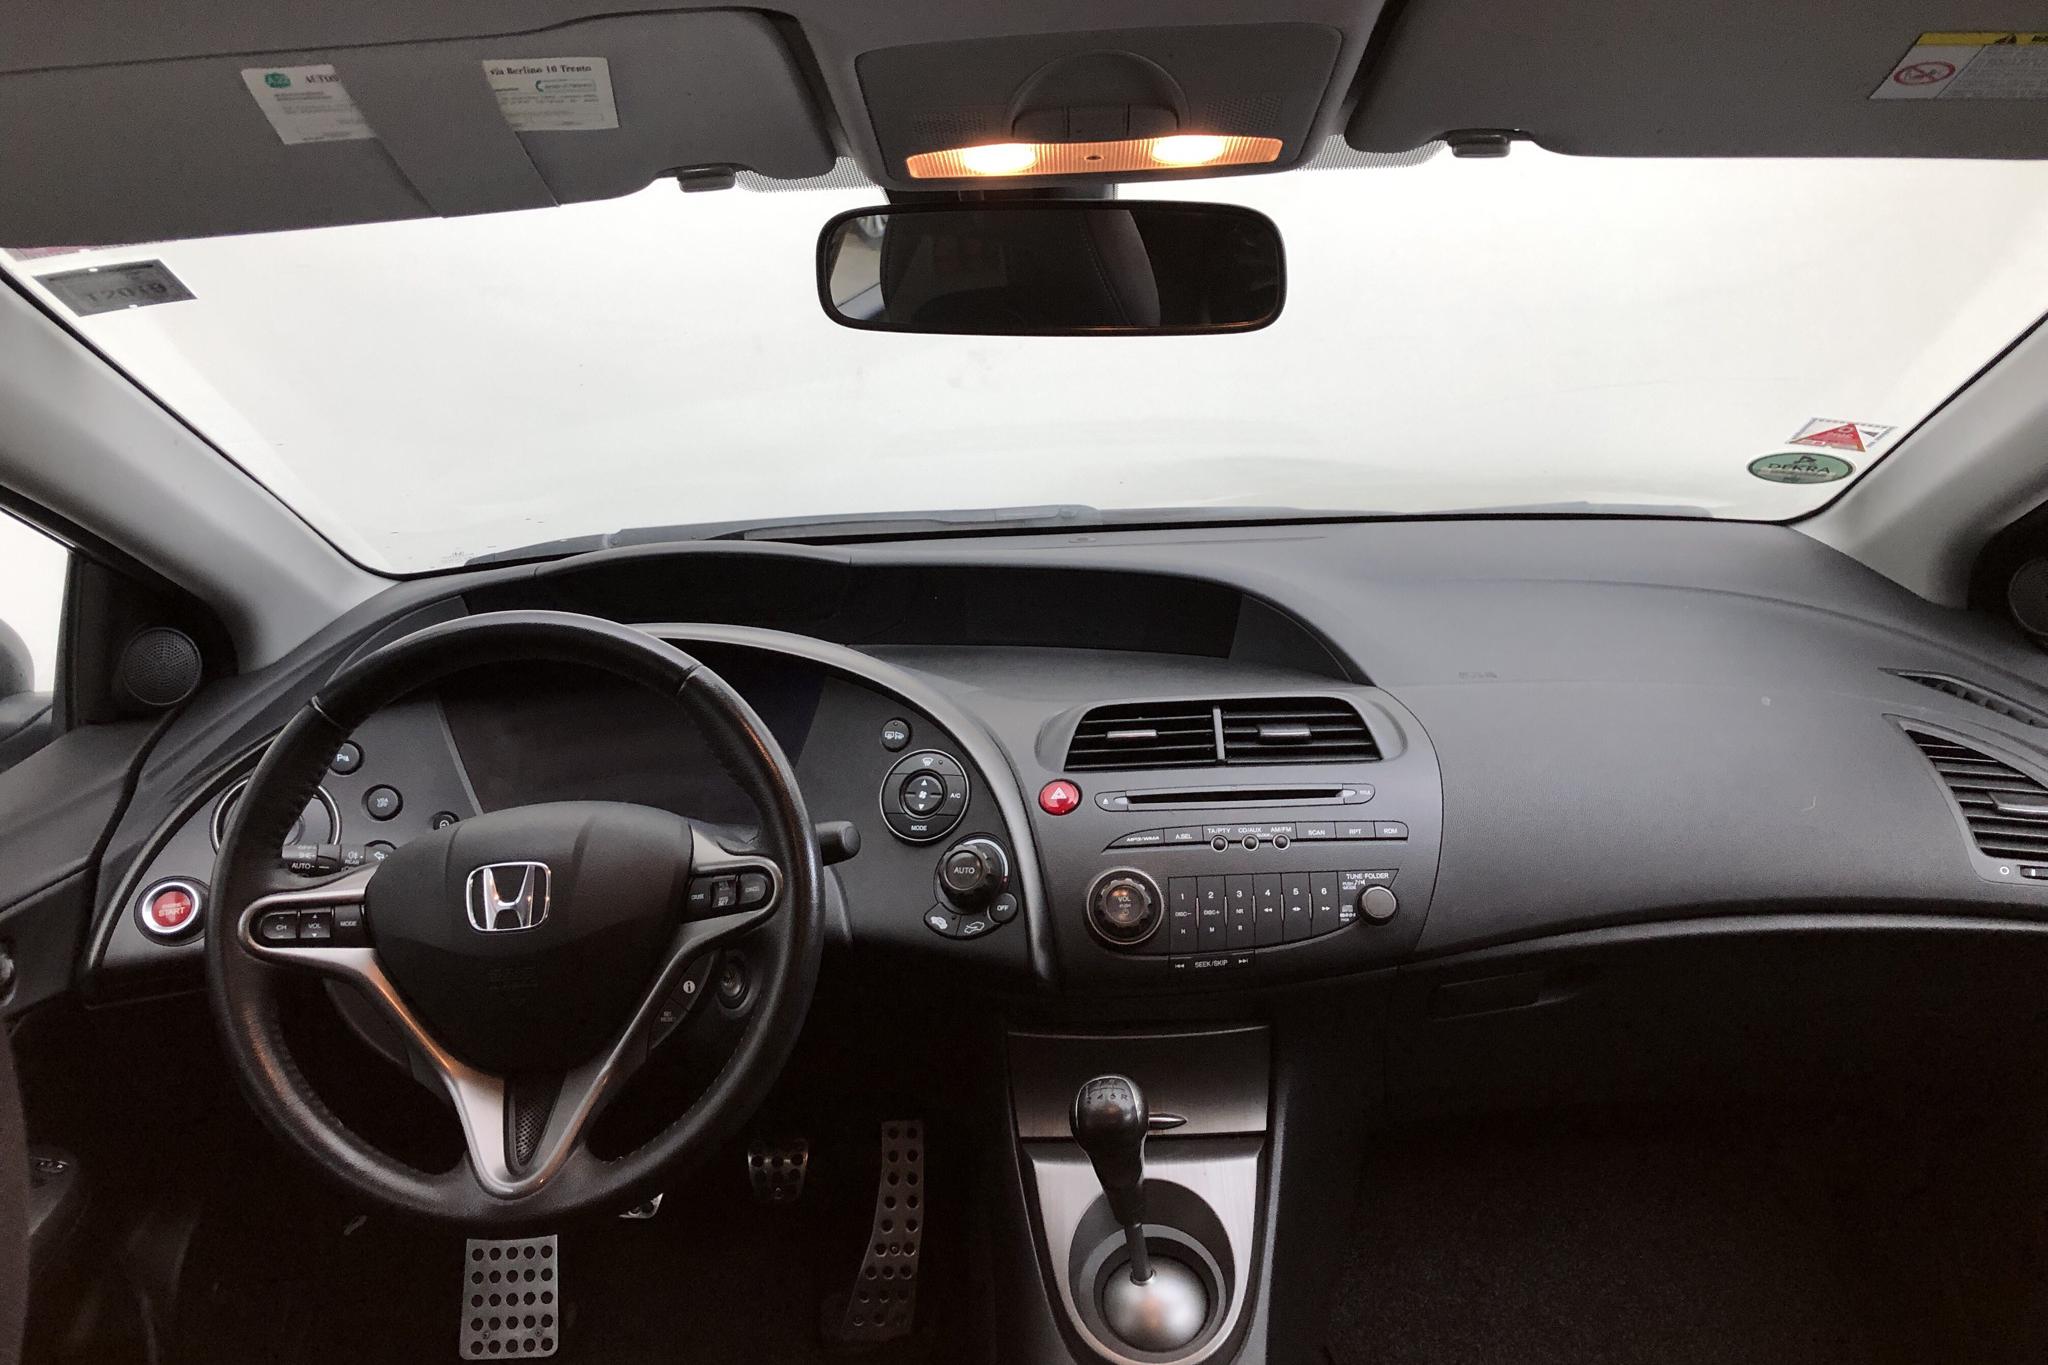 Honda Civic 1.8 5dr (140hk) - 156 480 km - Manual - Light Grey - 2010